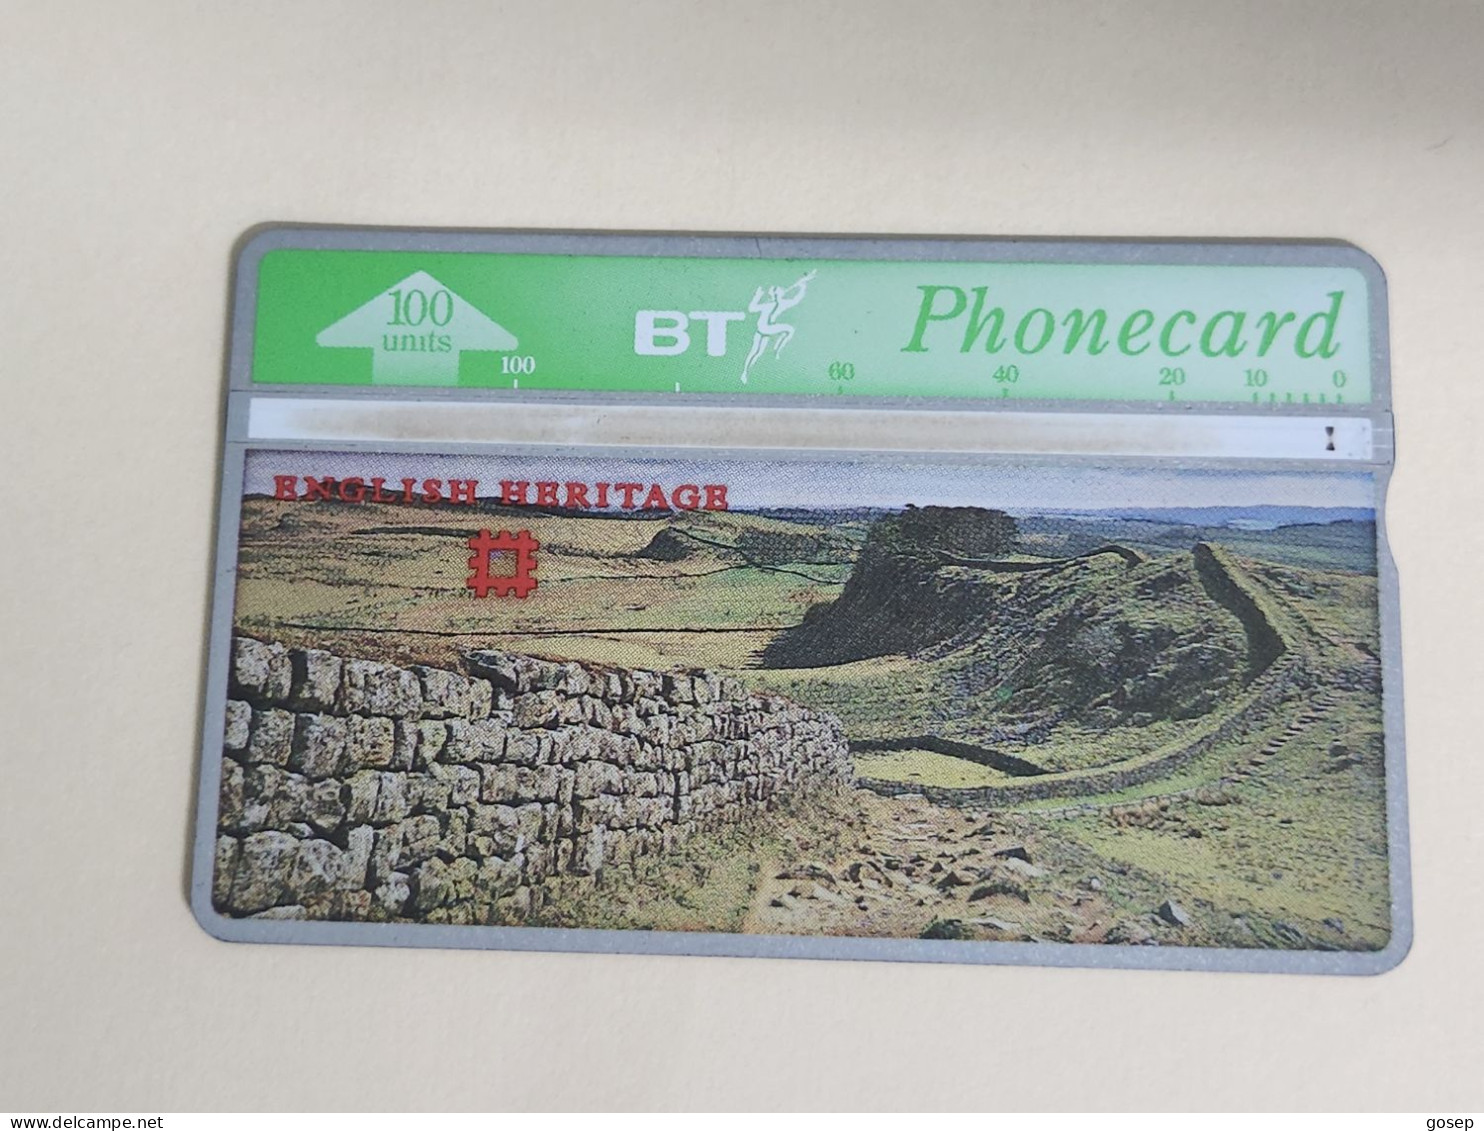 United Kingdom-(BTA117)-HERITAGE-Hadrian's Wall-(204)(100units)(527H20786)price Cataloge3.00£-used+1card Prepiad Free - BT Werbezwecke